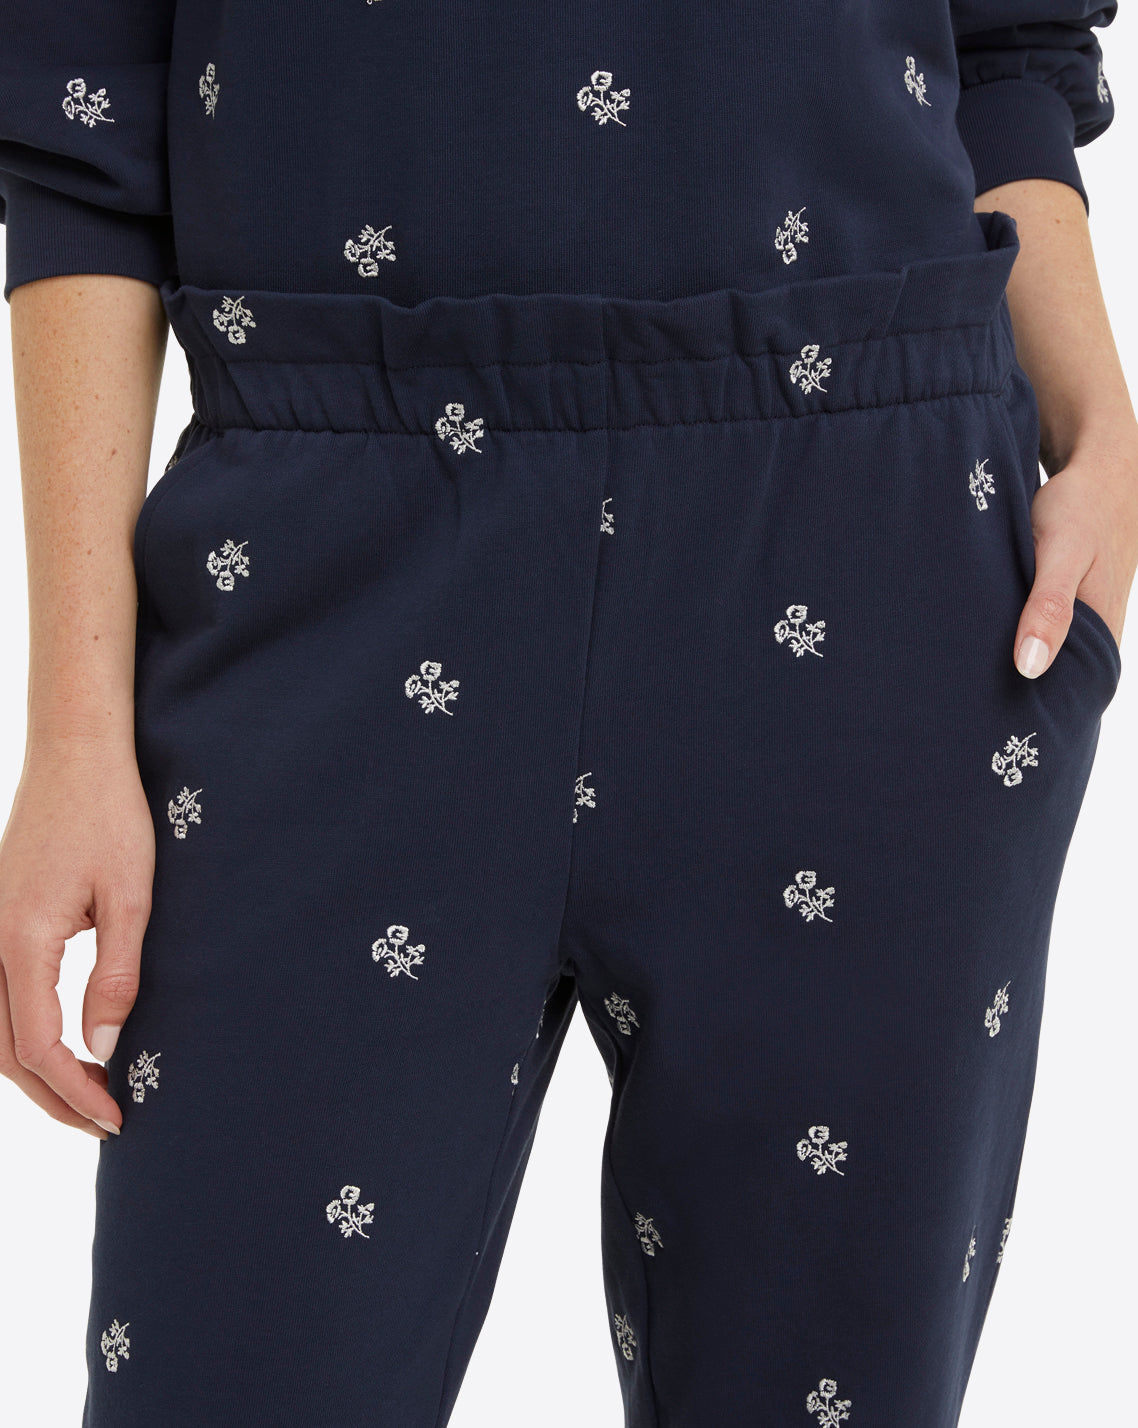 Bobbie Sweatpants in Navy Embroidered Viola